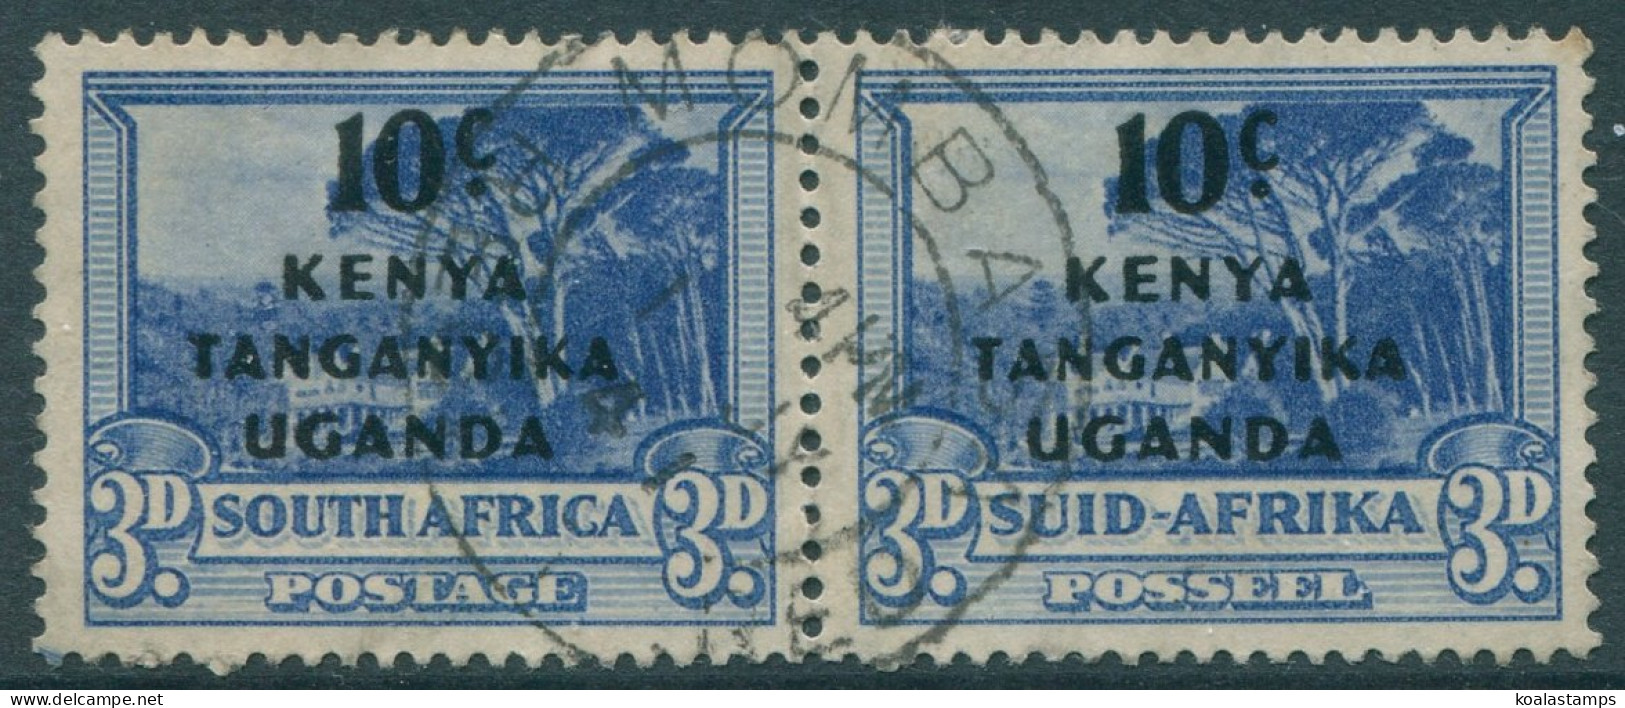 Kenya Uganda And Tanganyika 1941 SG152 10c Ovpt On 3d Ultramarine SA Pair FU (am - Kenya, Uganda & Tanganyika